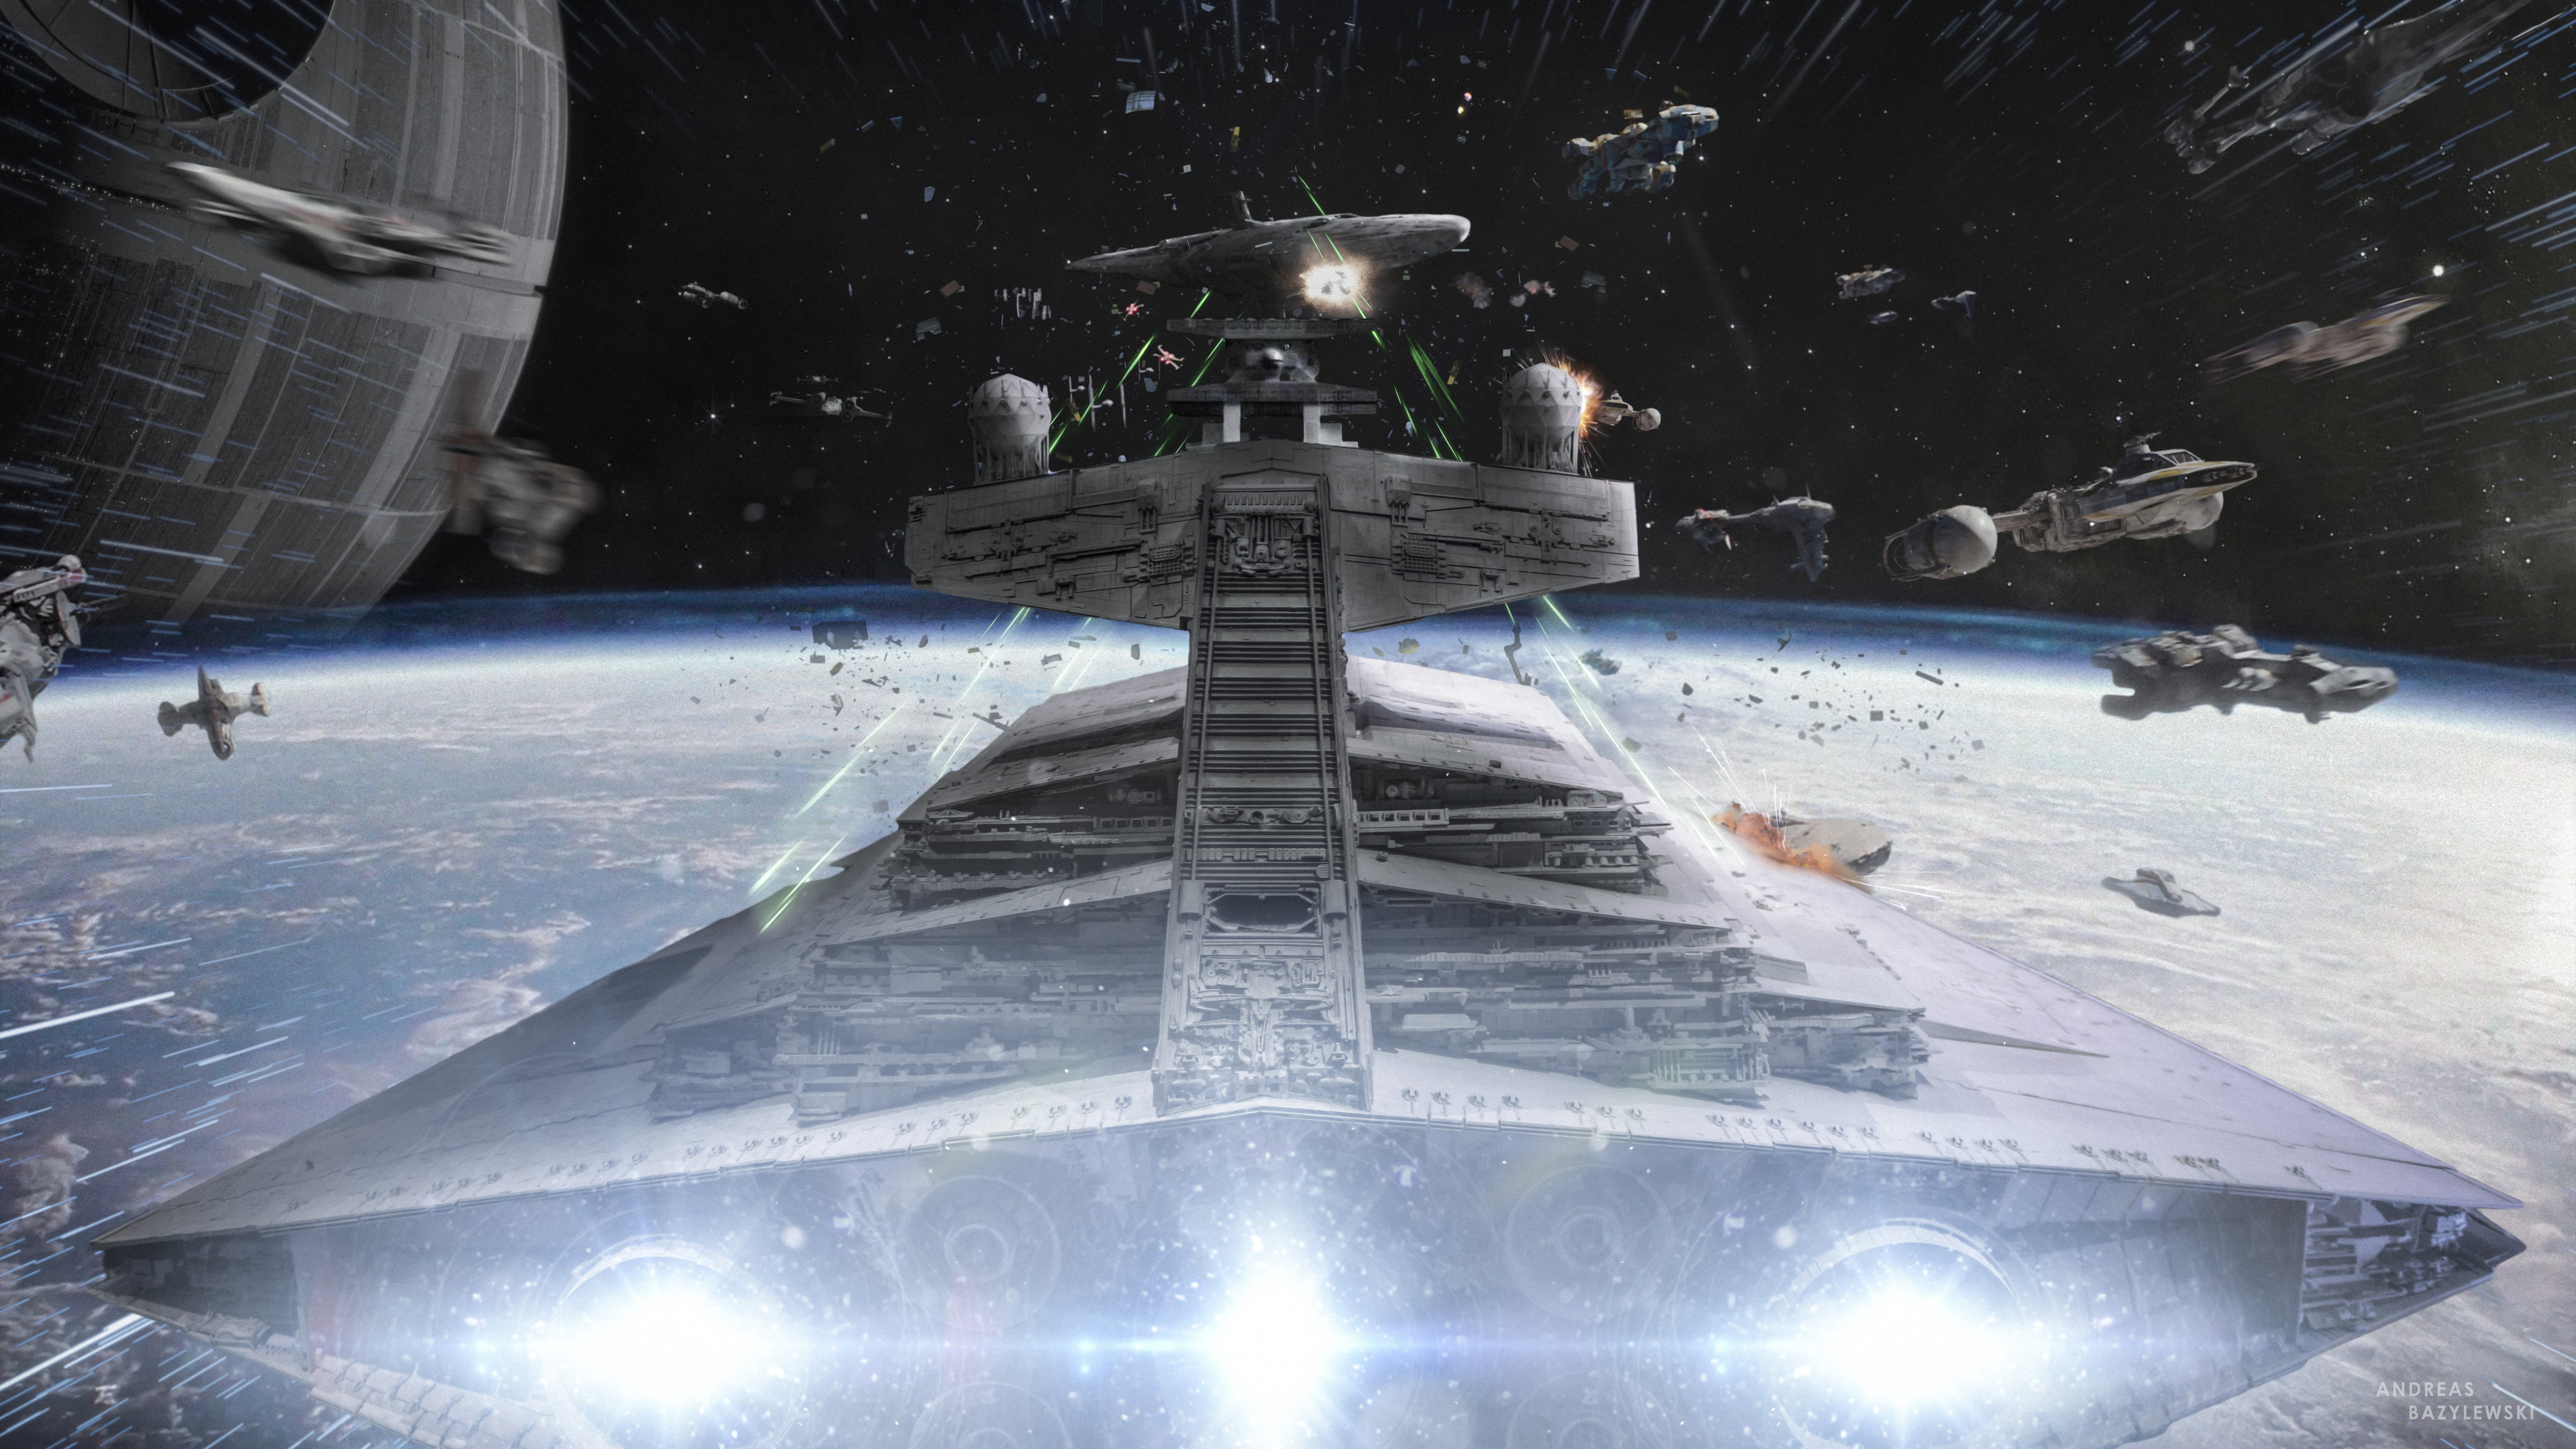 Star Wars Devastator Ship 8k HD 4k Wallpaper, Image, Background, Photo and Picture